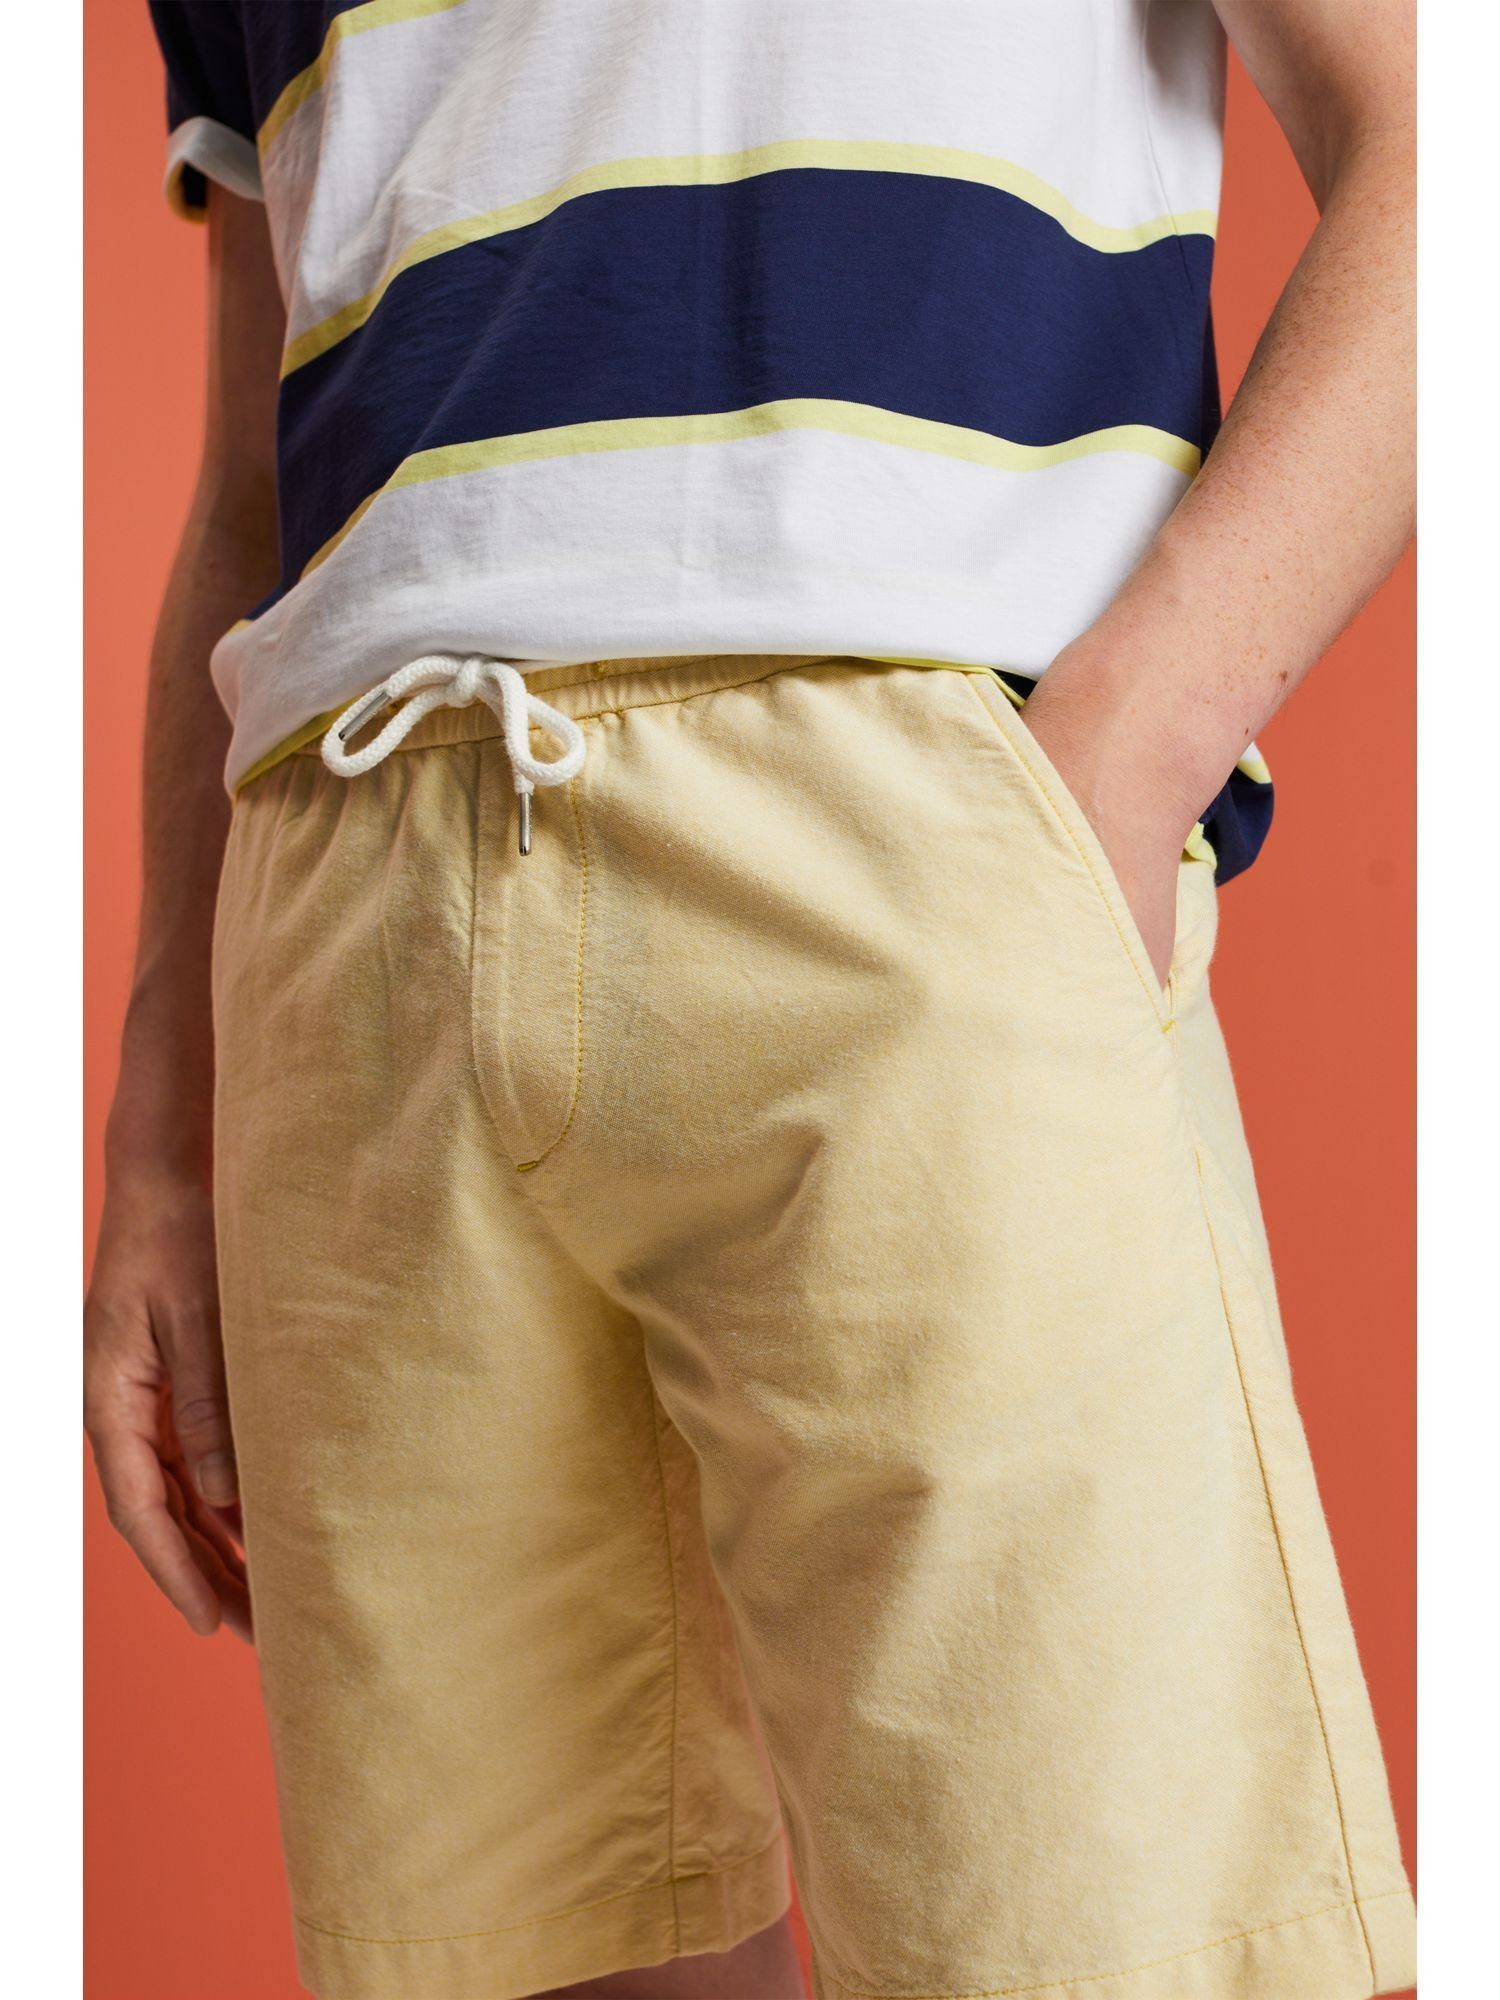 DUSTY % aus Esprit YELLOW Twill, Pull-on-Shorts (1-tlg) Shorts 100 Baumwolle